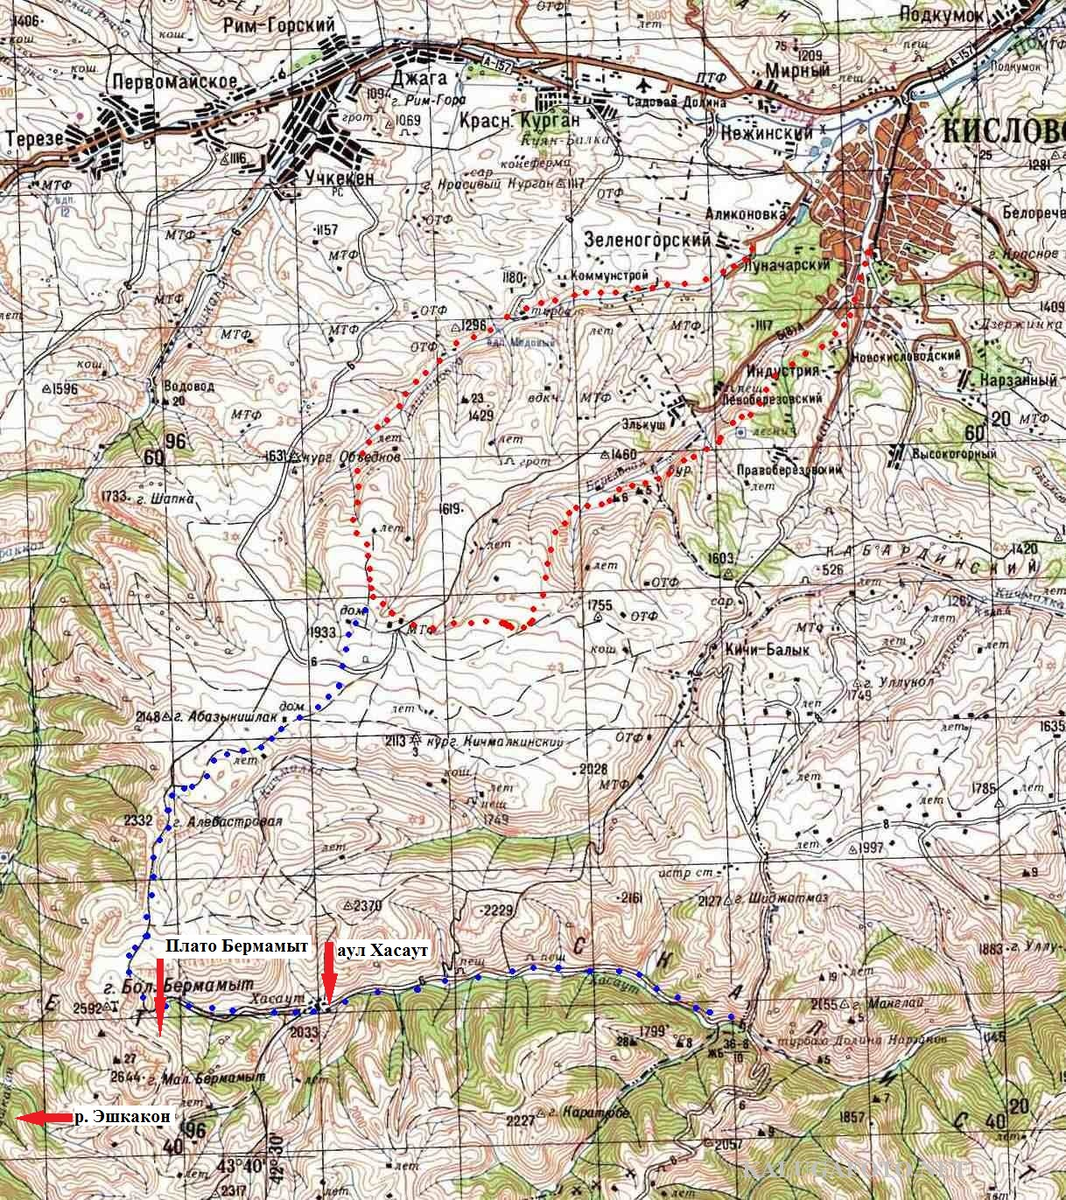 Джилы су на карте. Плато Бермамыт на карте Кисловодска. Бермамыт и Эльбрус на карте. Дорога на плато Бермамыт из Кисловодска на карте.